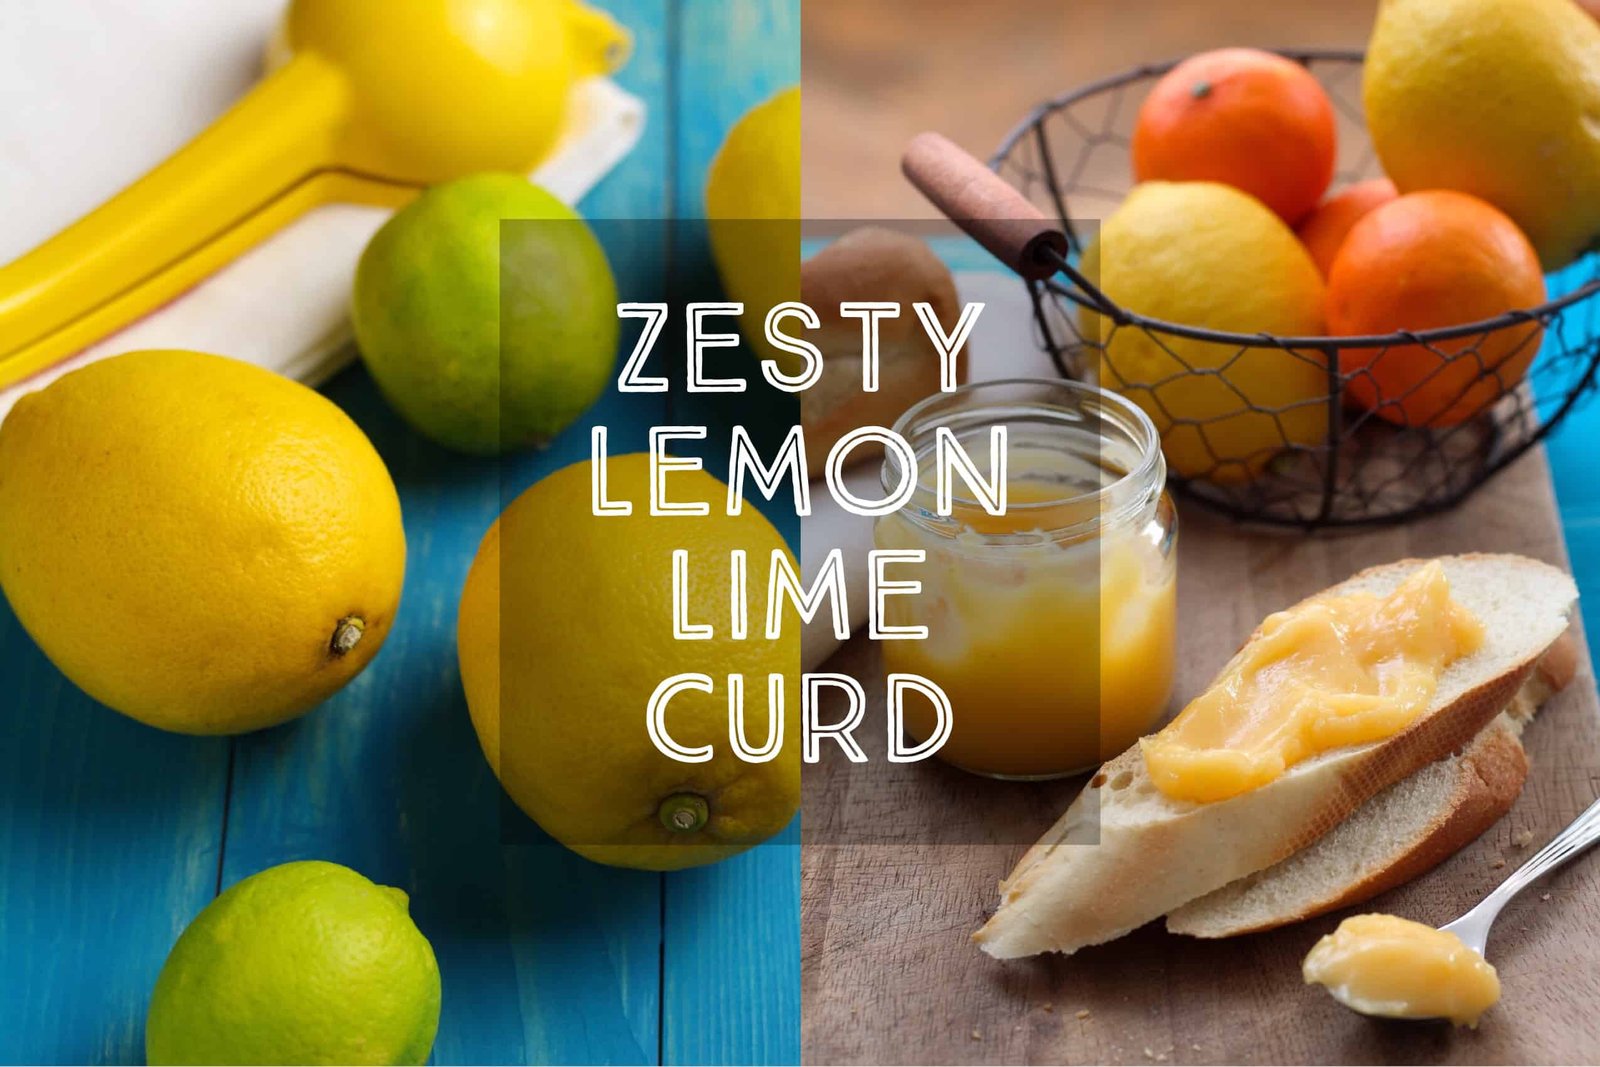 Zesty Lemon Lime Curd